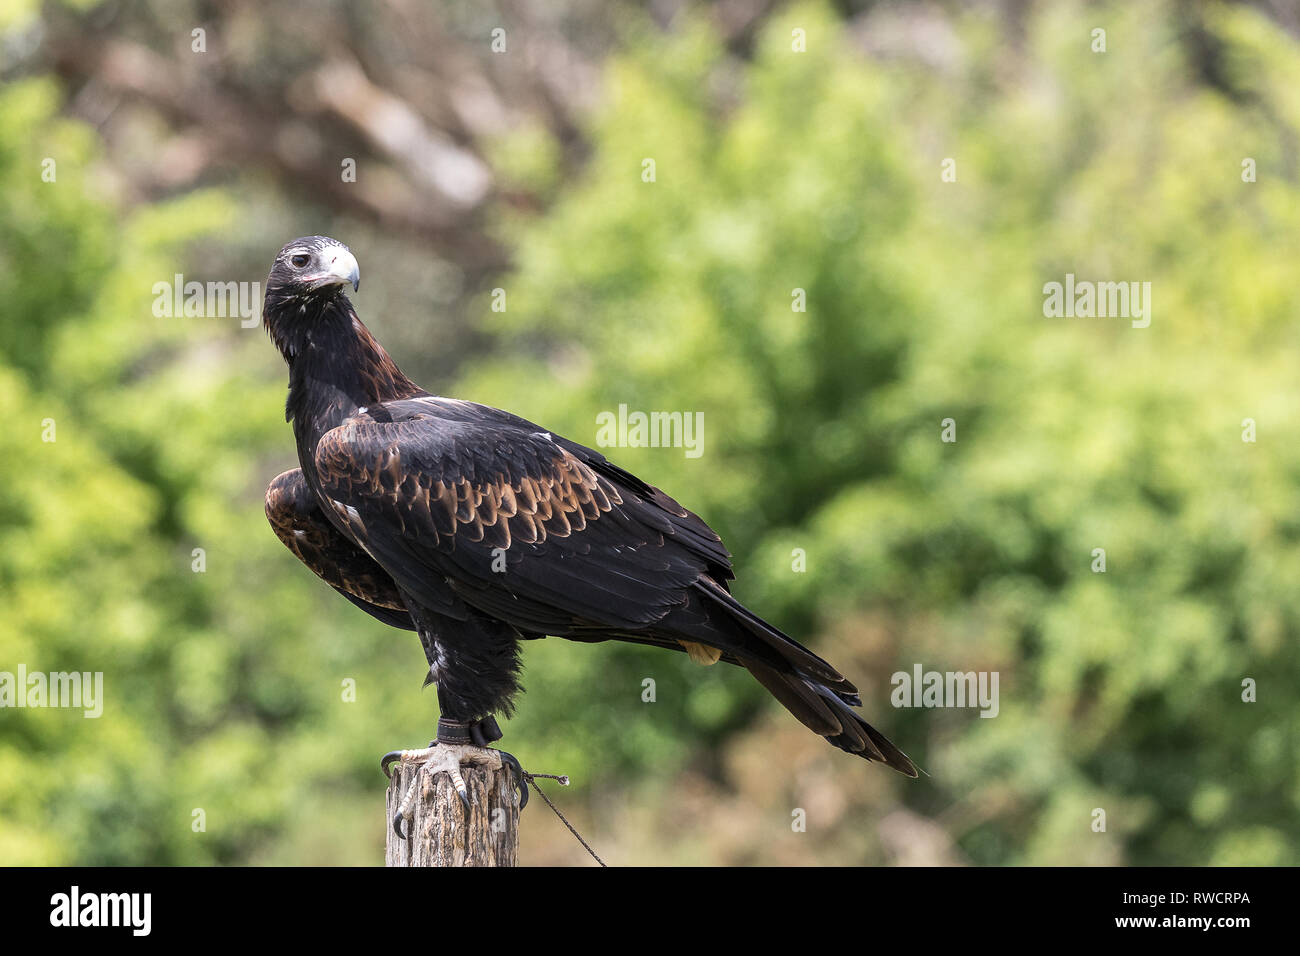 Australian Wedge Tailed Eagle sitting on post Stock Photo - Alamy